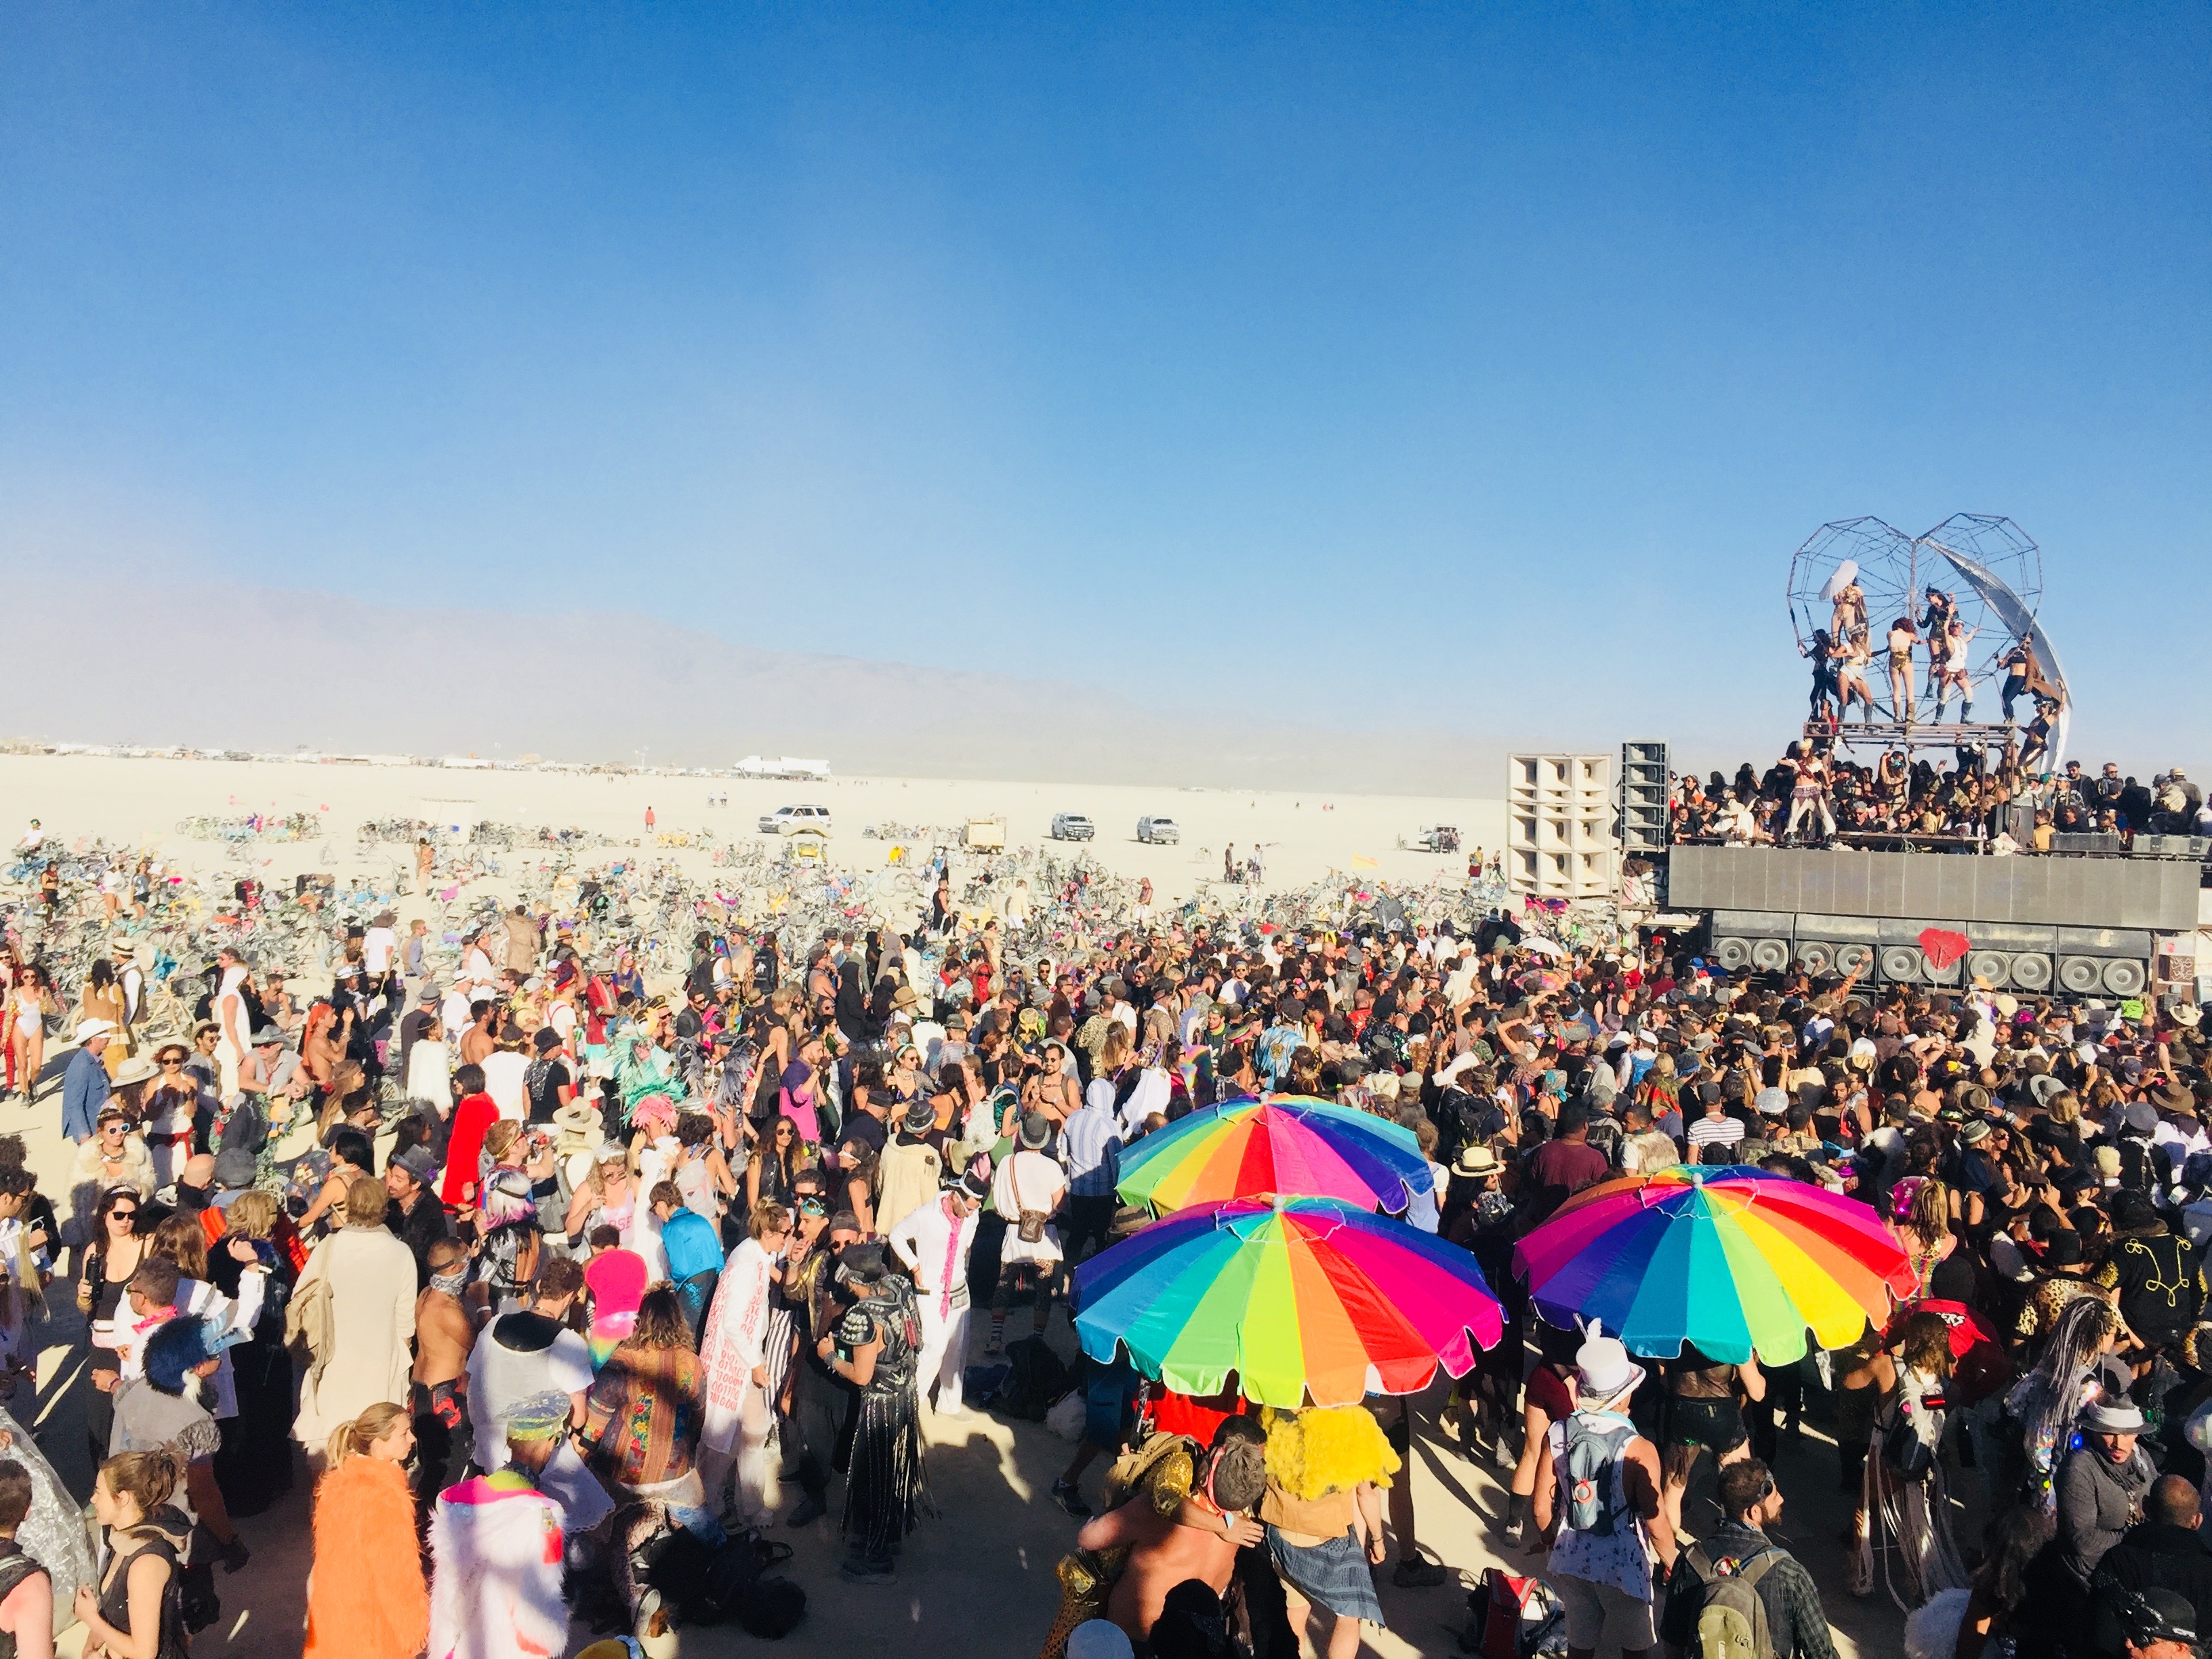 Euphoric Threads explores Burning Man 2018